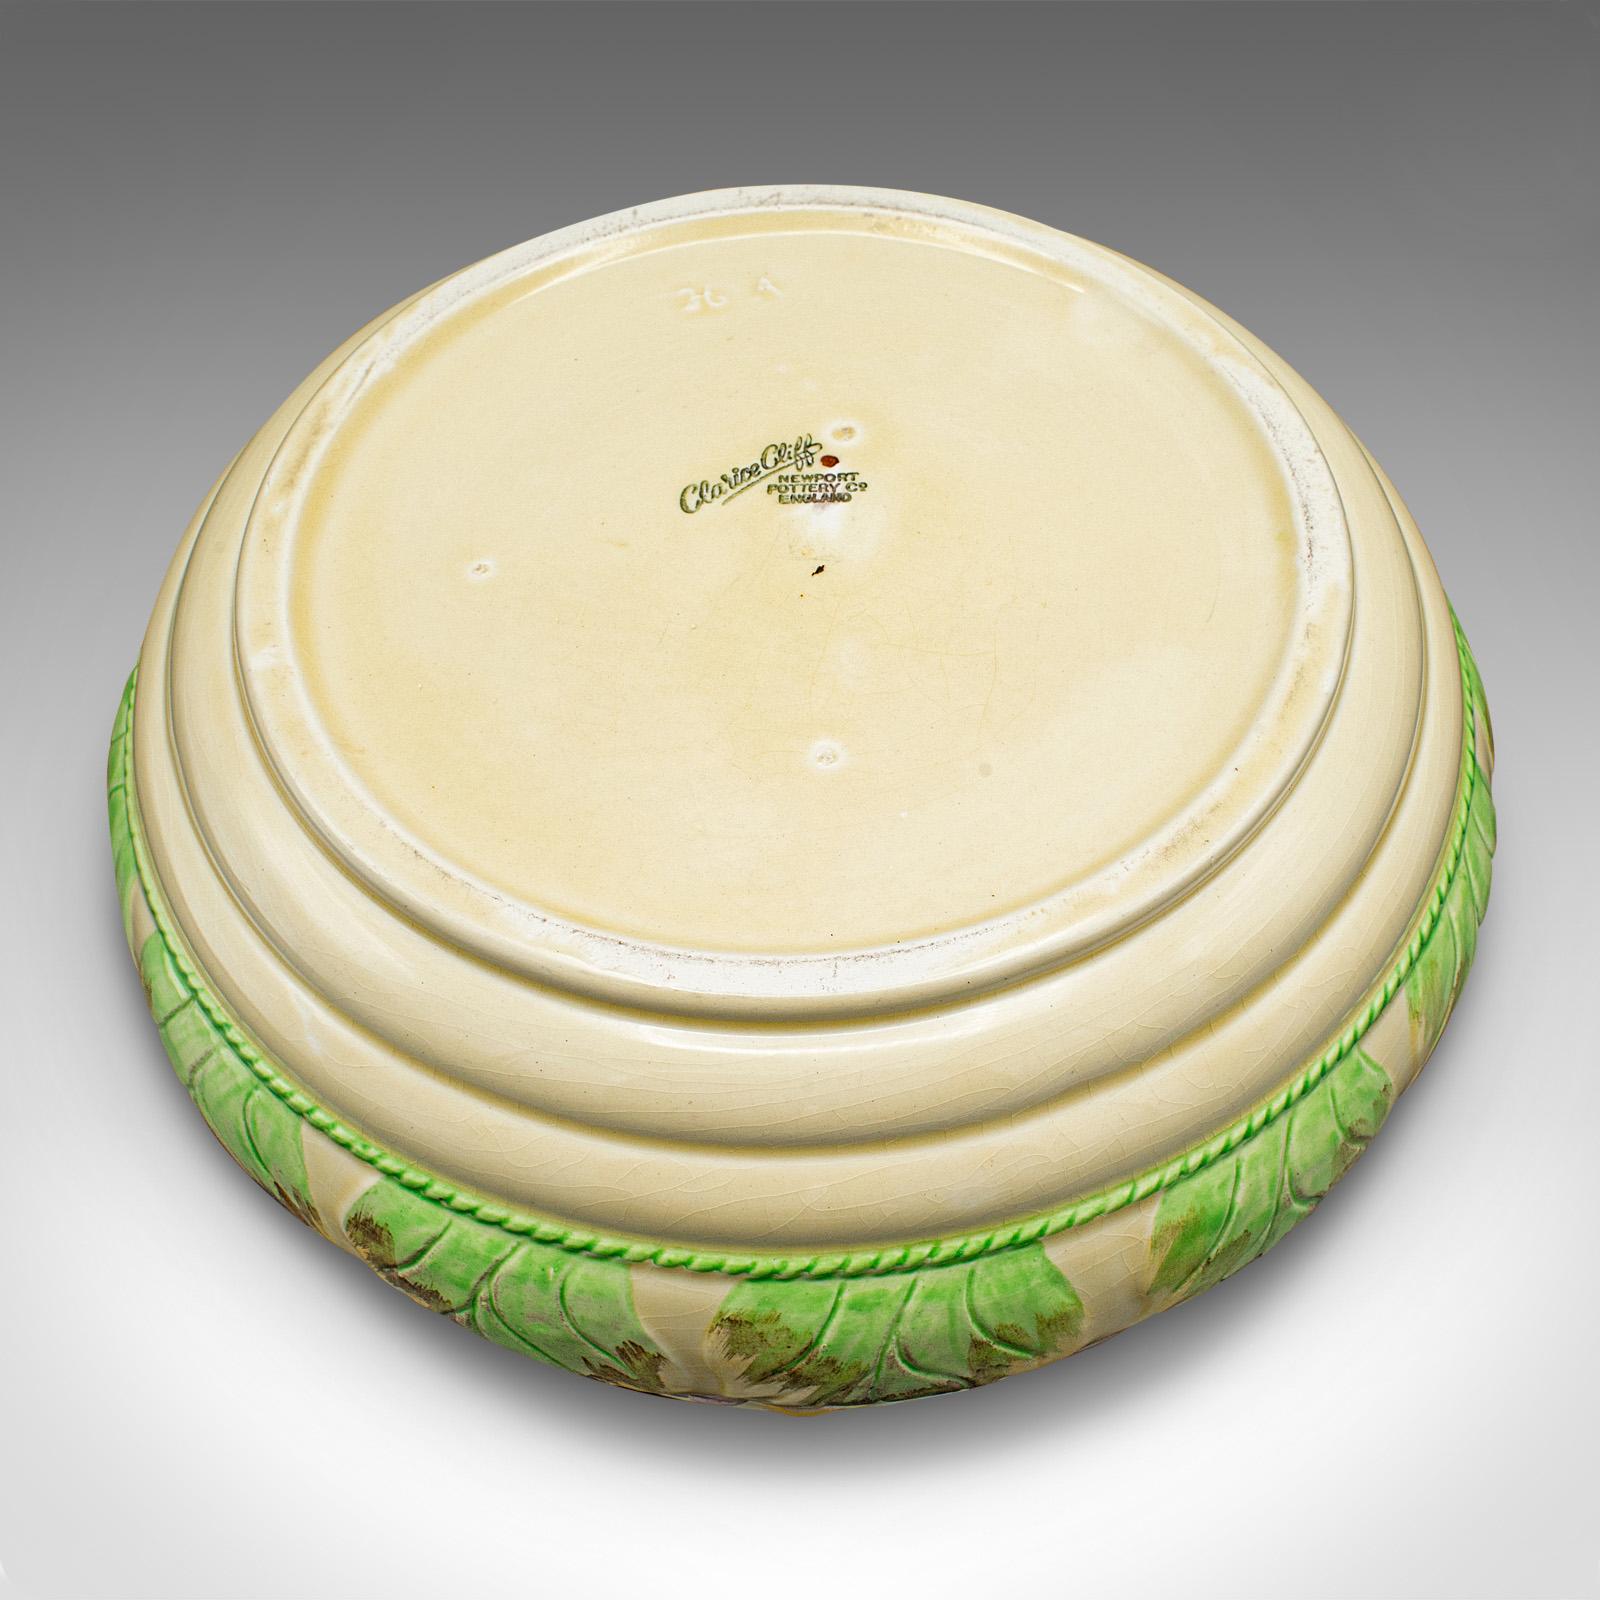 Large Vintage Fruit Bowl, English, Hand Painted Ceramic, Decorative Dish, C.1930 For Sale 1